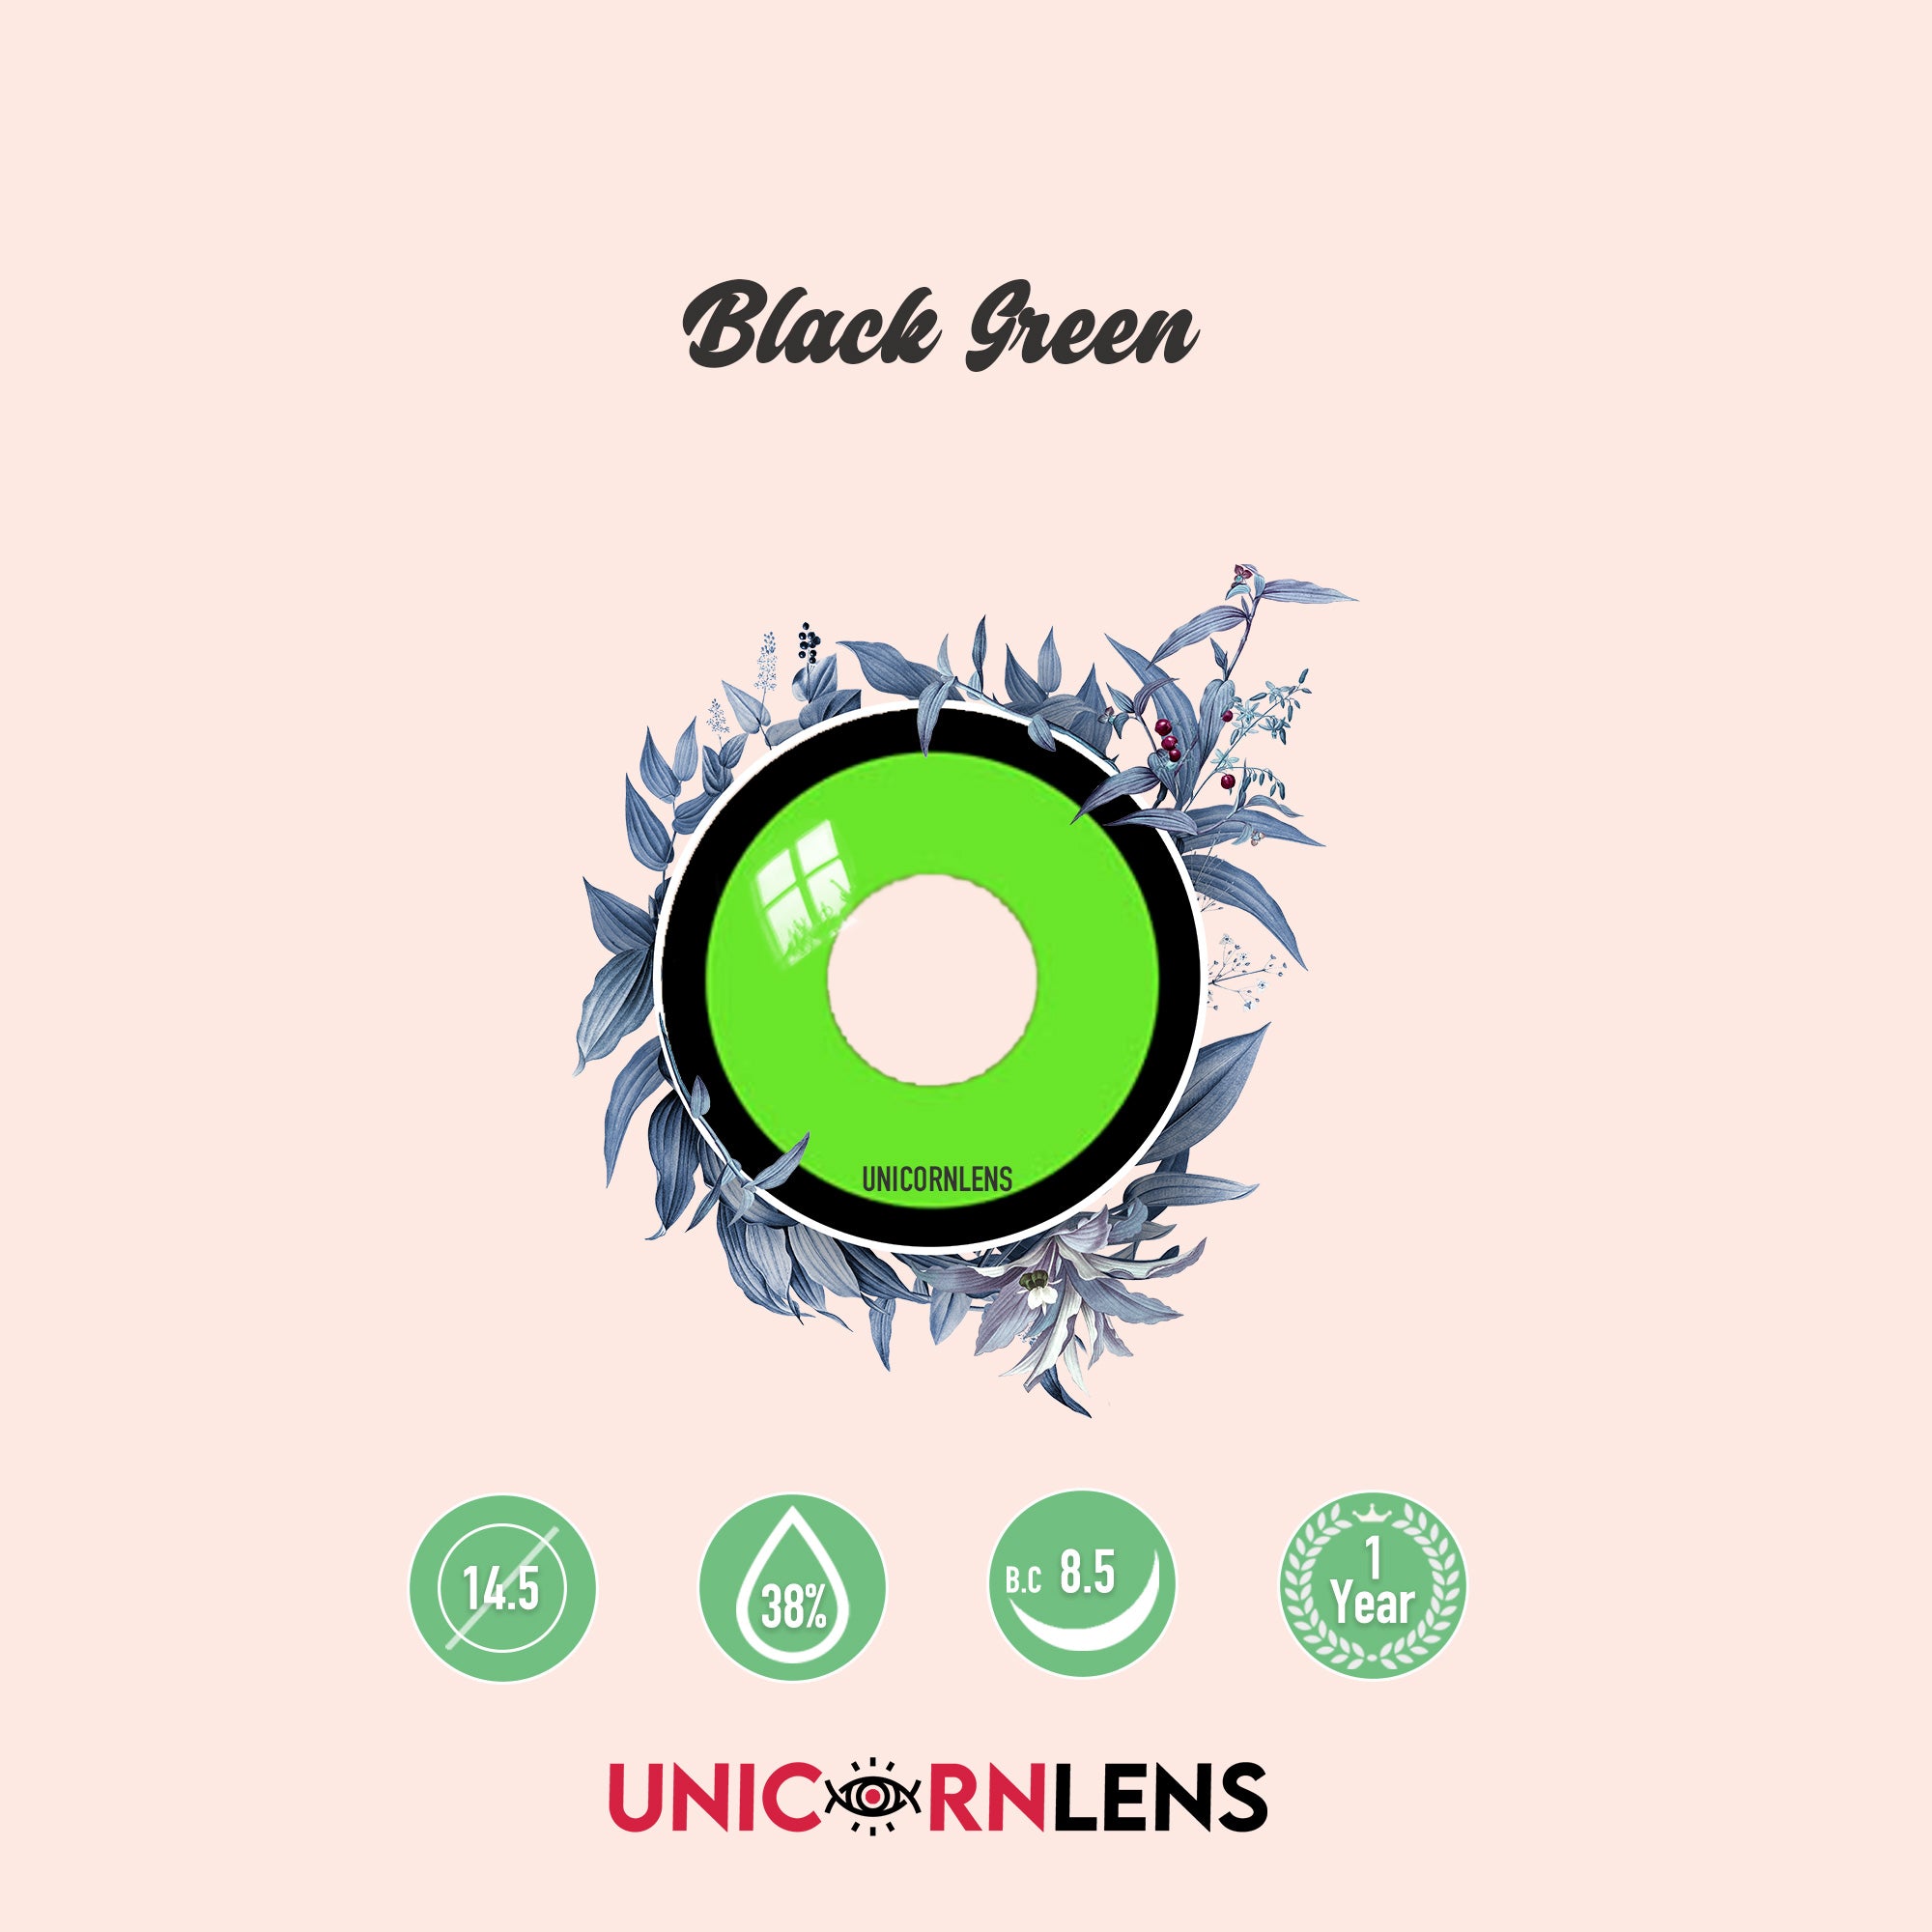 Unicornlens Black Green Colored Contact Lenses - Unicornlens